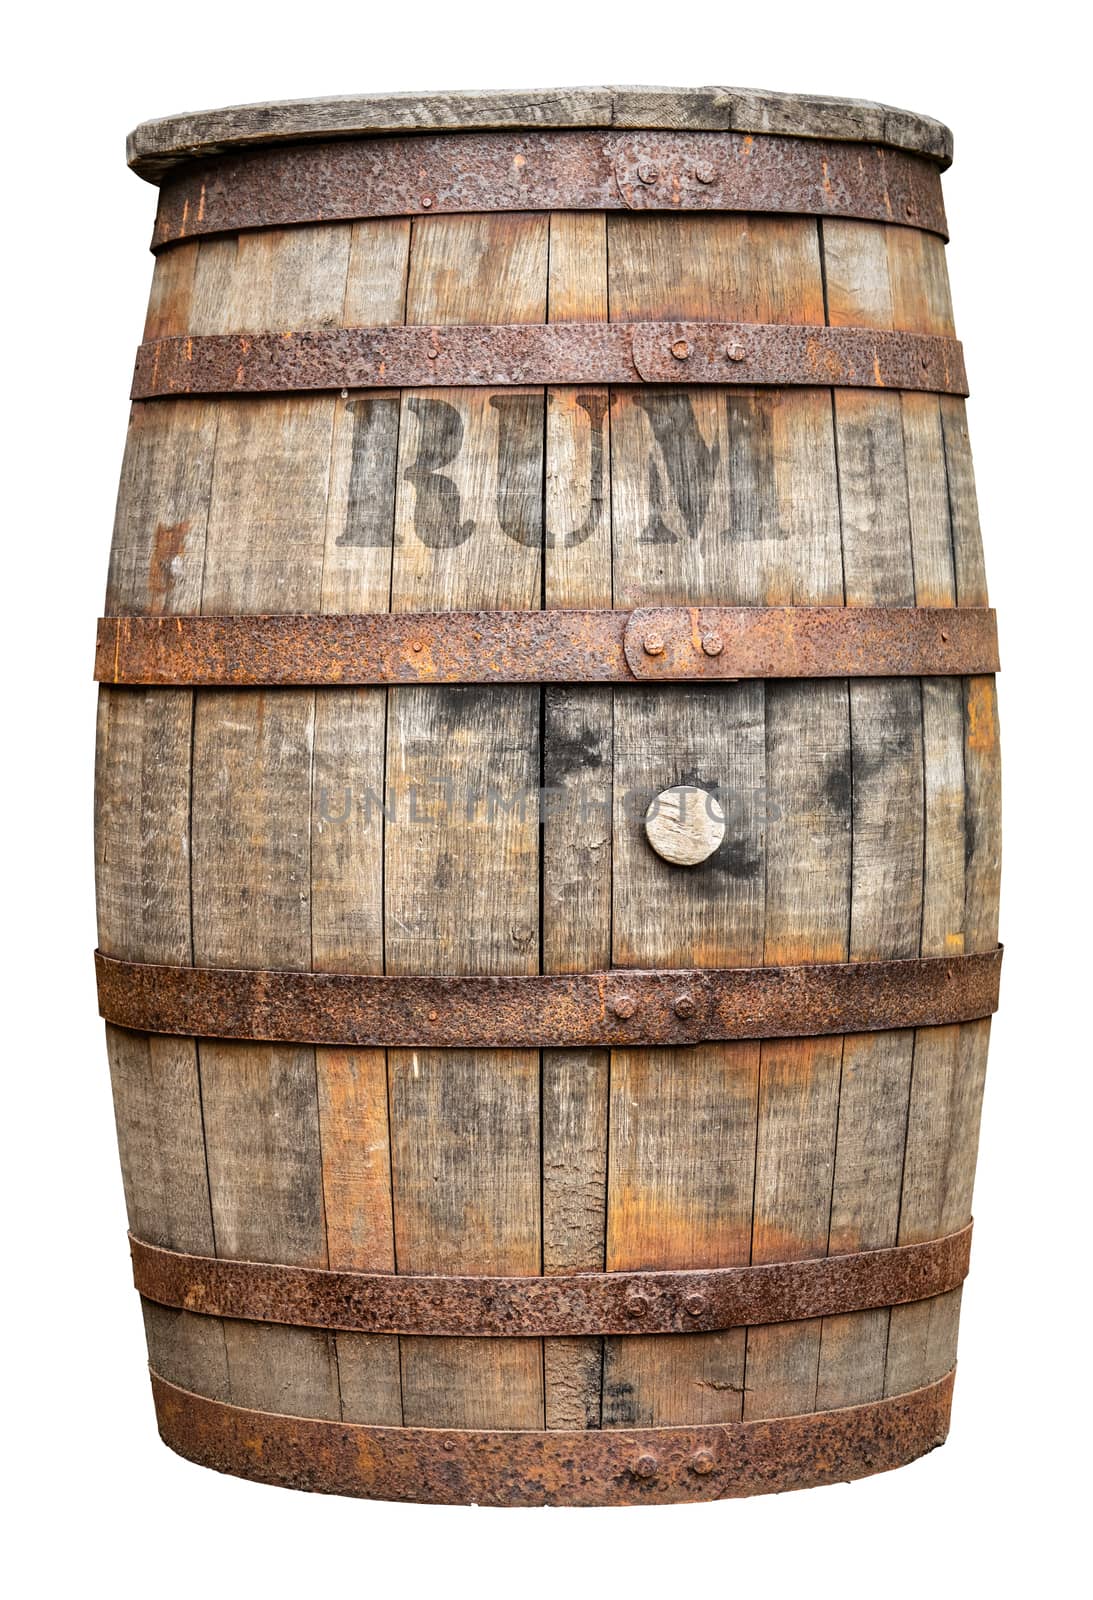 Vintage Wooden Rum Barrel by mrdoomits